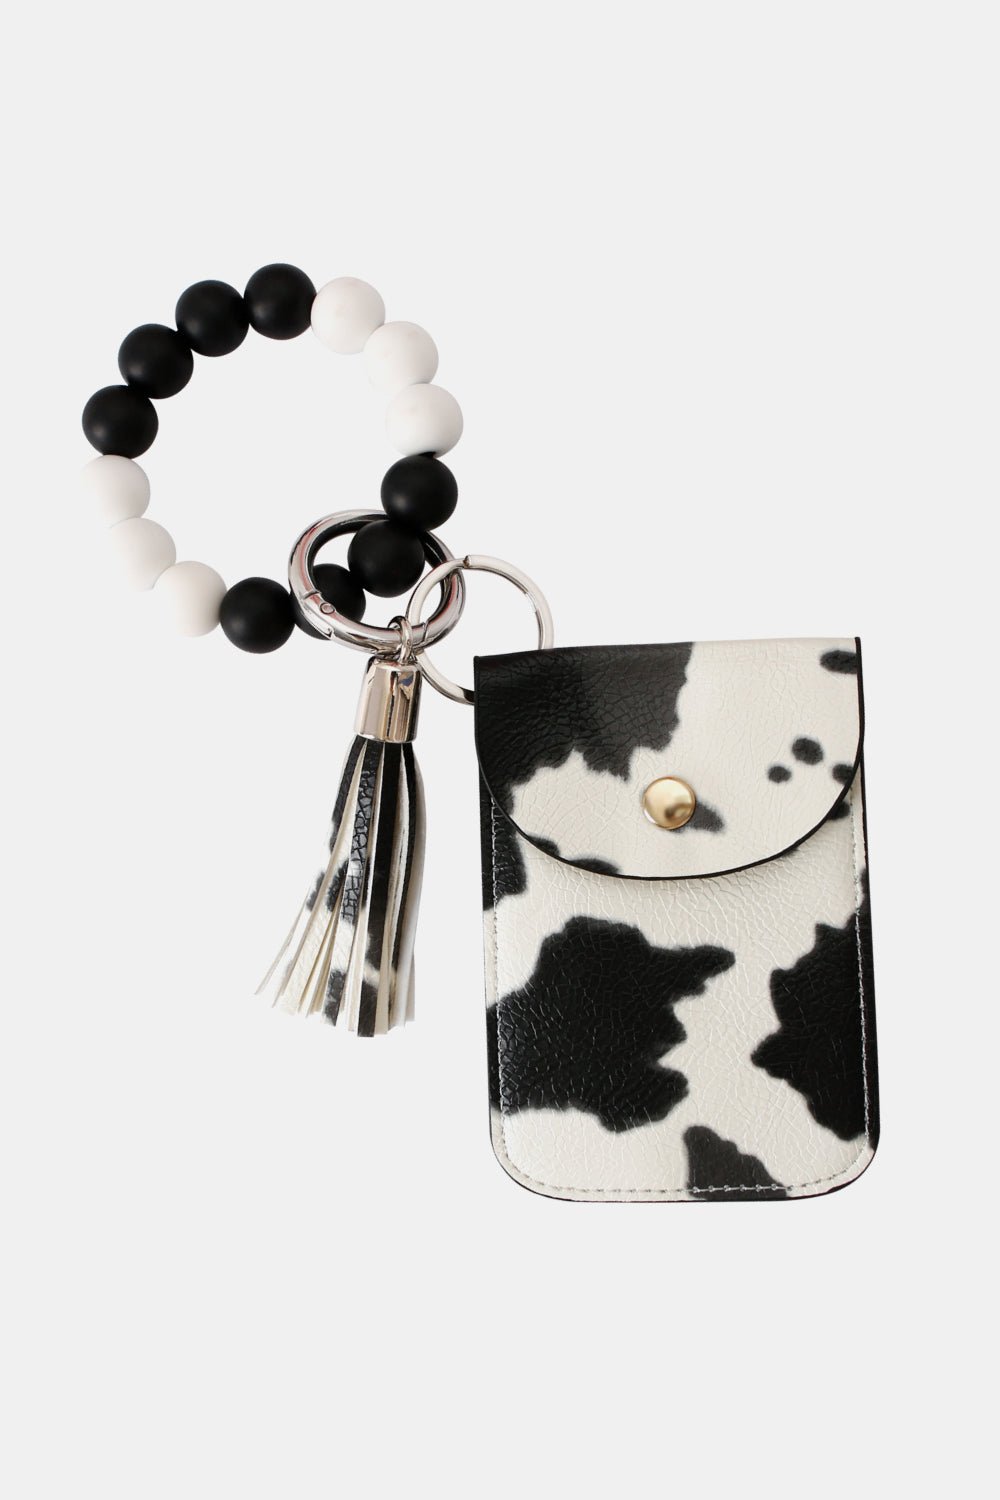 Bead Wristlet Key Chain with Wallet - Tangerine Goddess